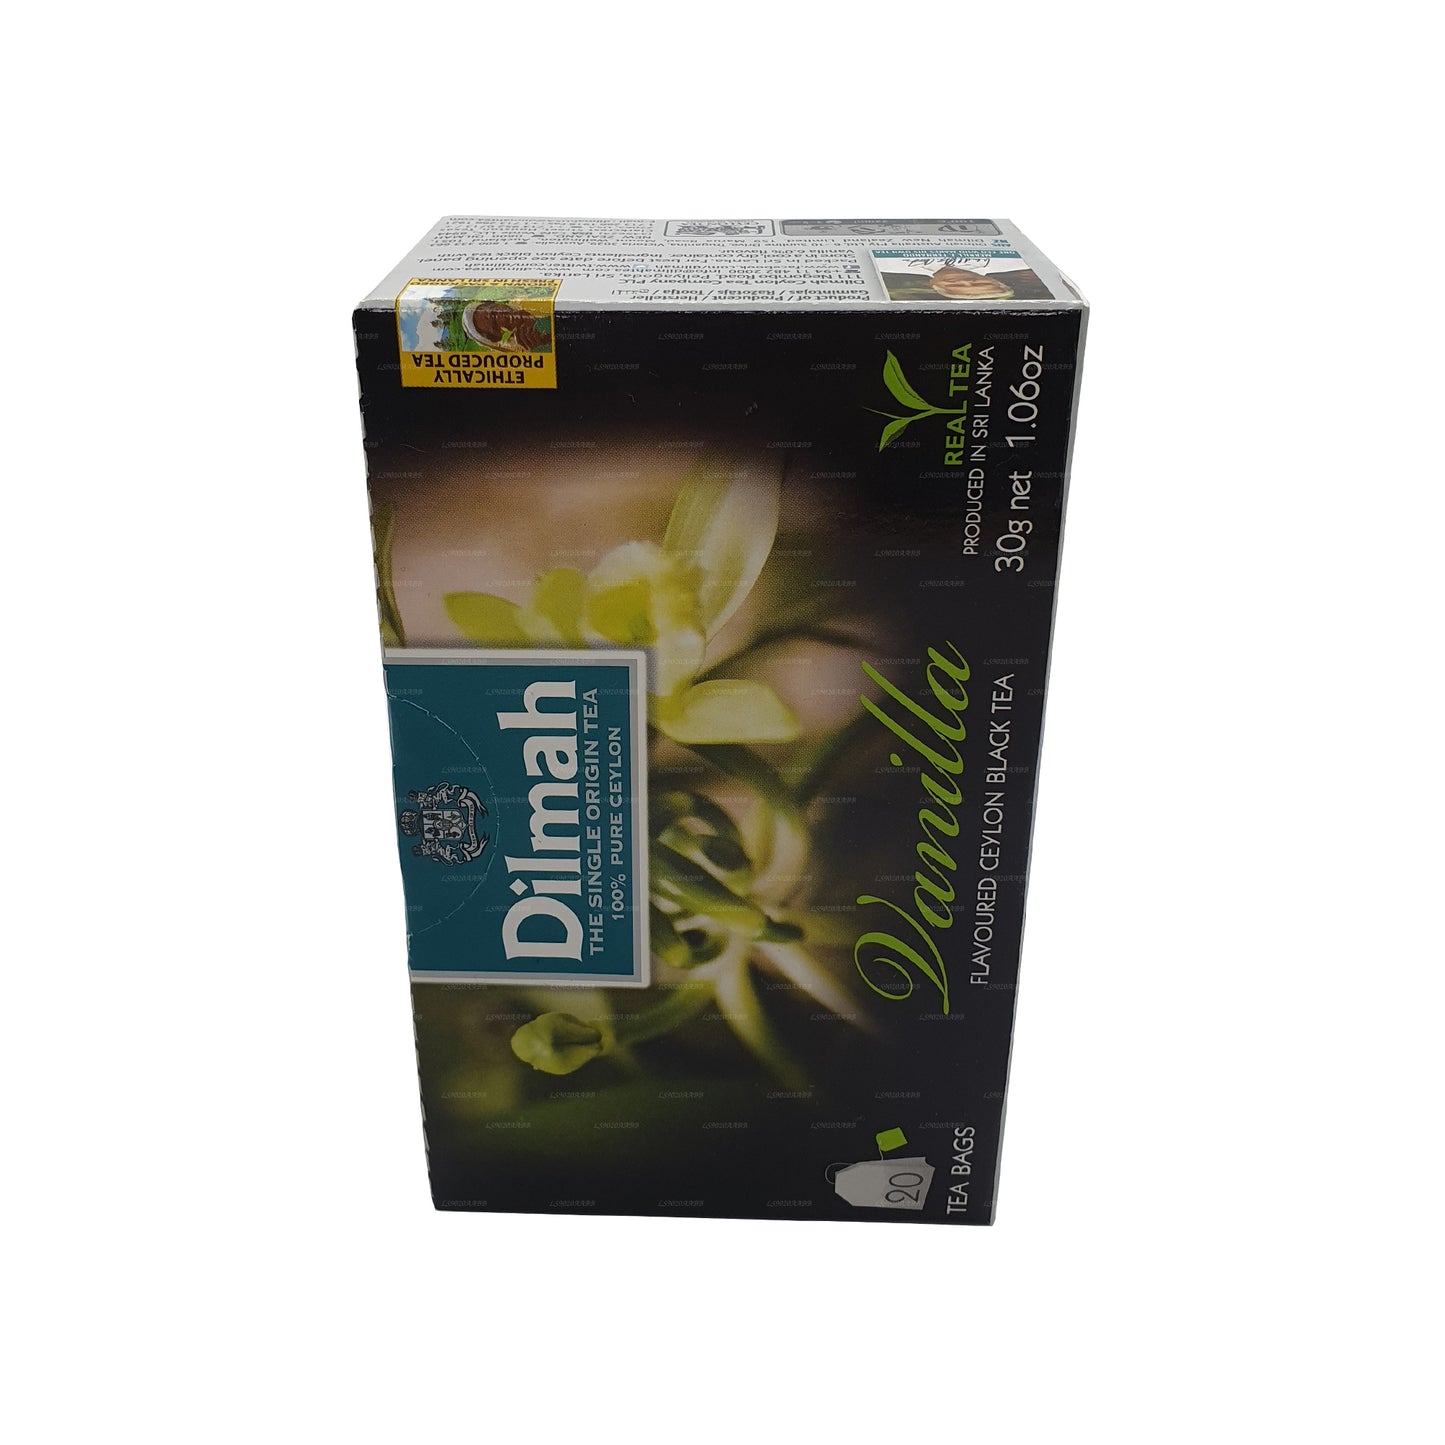 Dilmah Herbata o smaku waniliowym (40g) 20 torebek